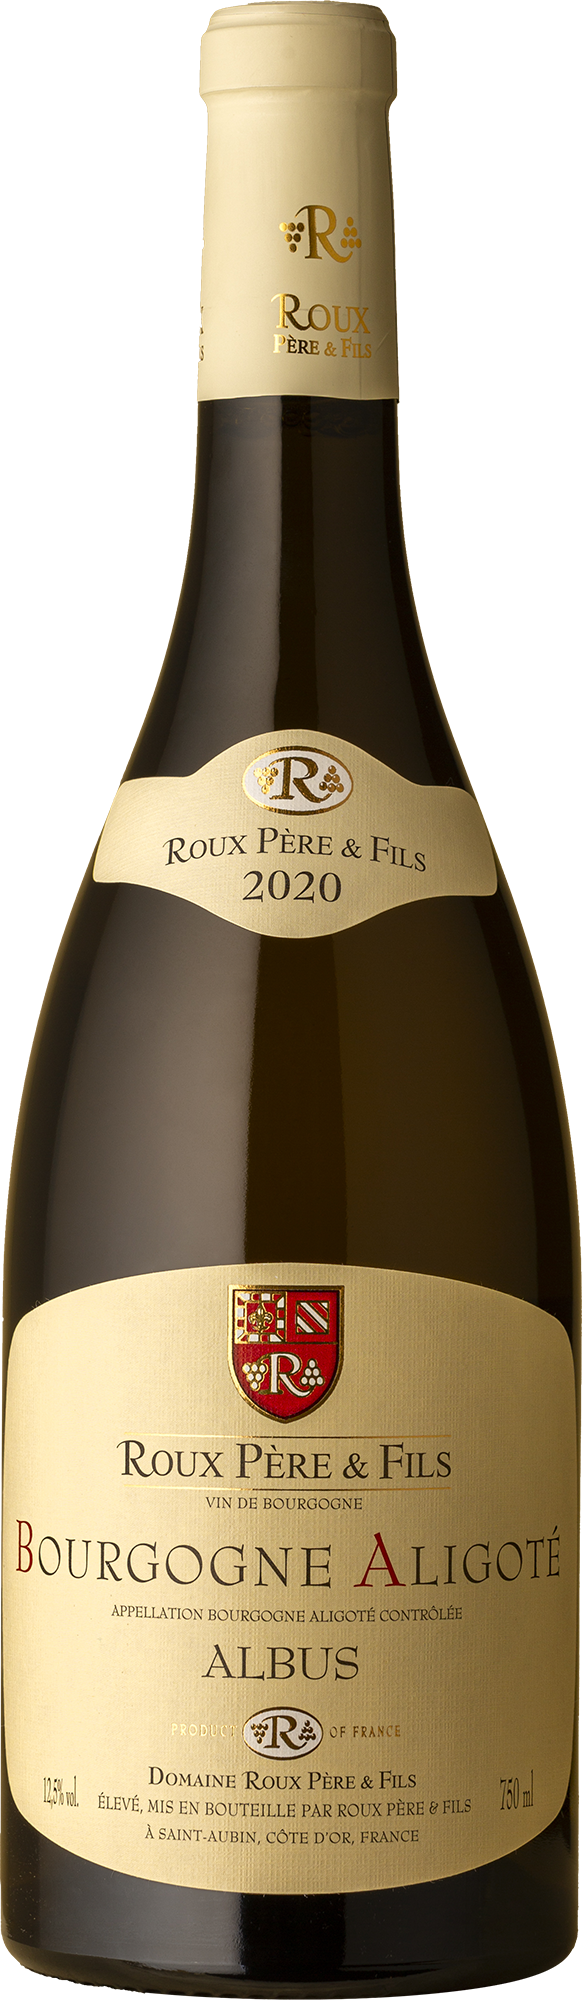 Domaine Roux - Bourgogne Aligoté Albus 2020 White Wine